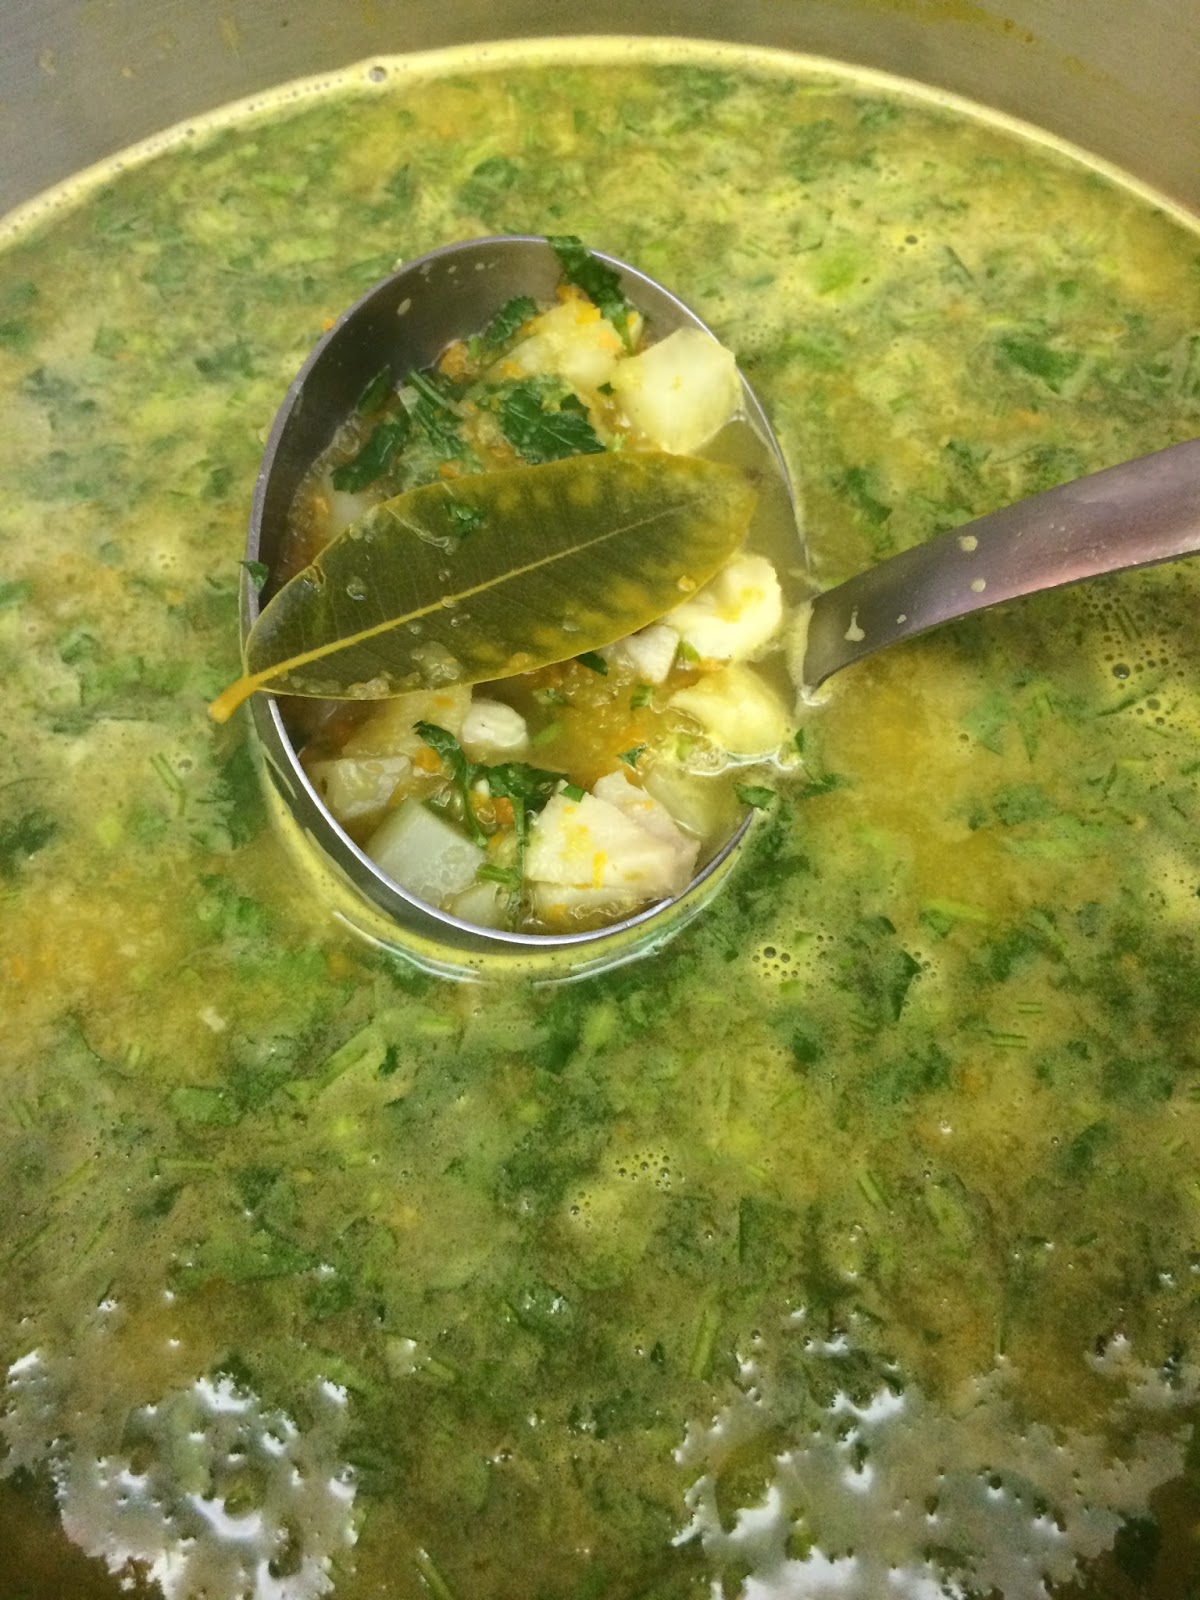 Nana's Blue and White Dishes: Italian Fish Soup